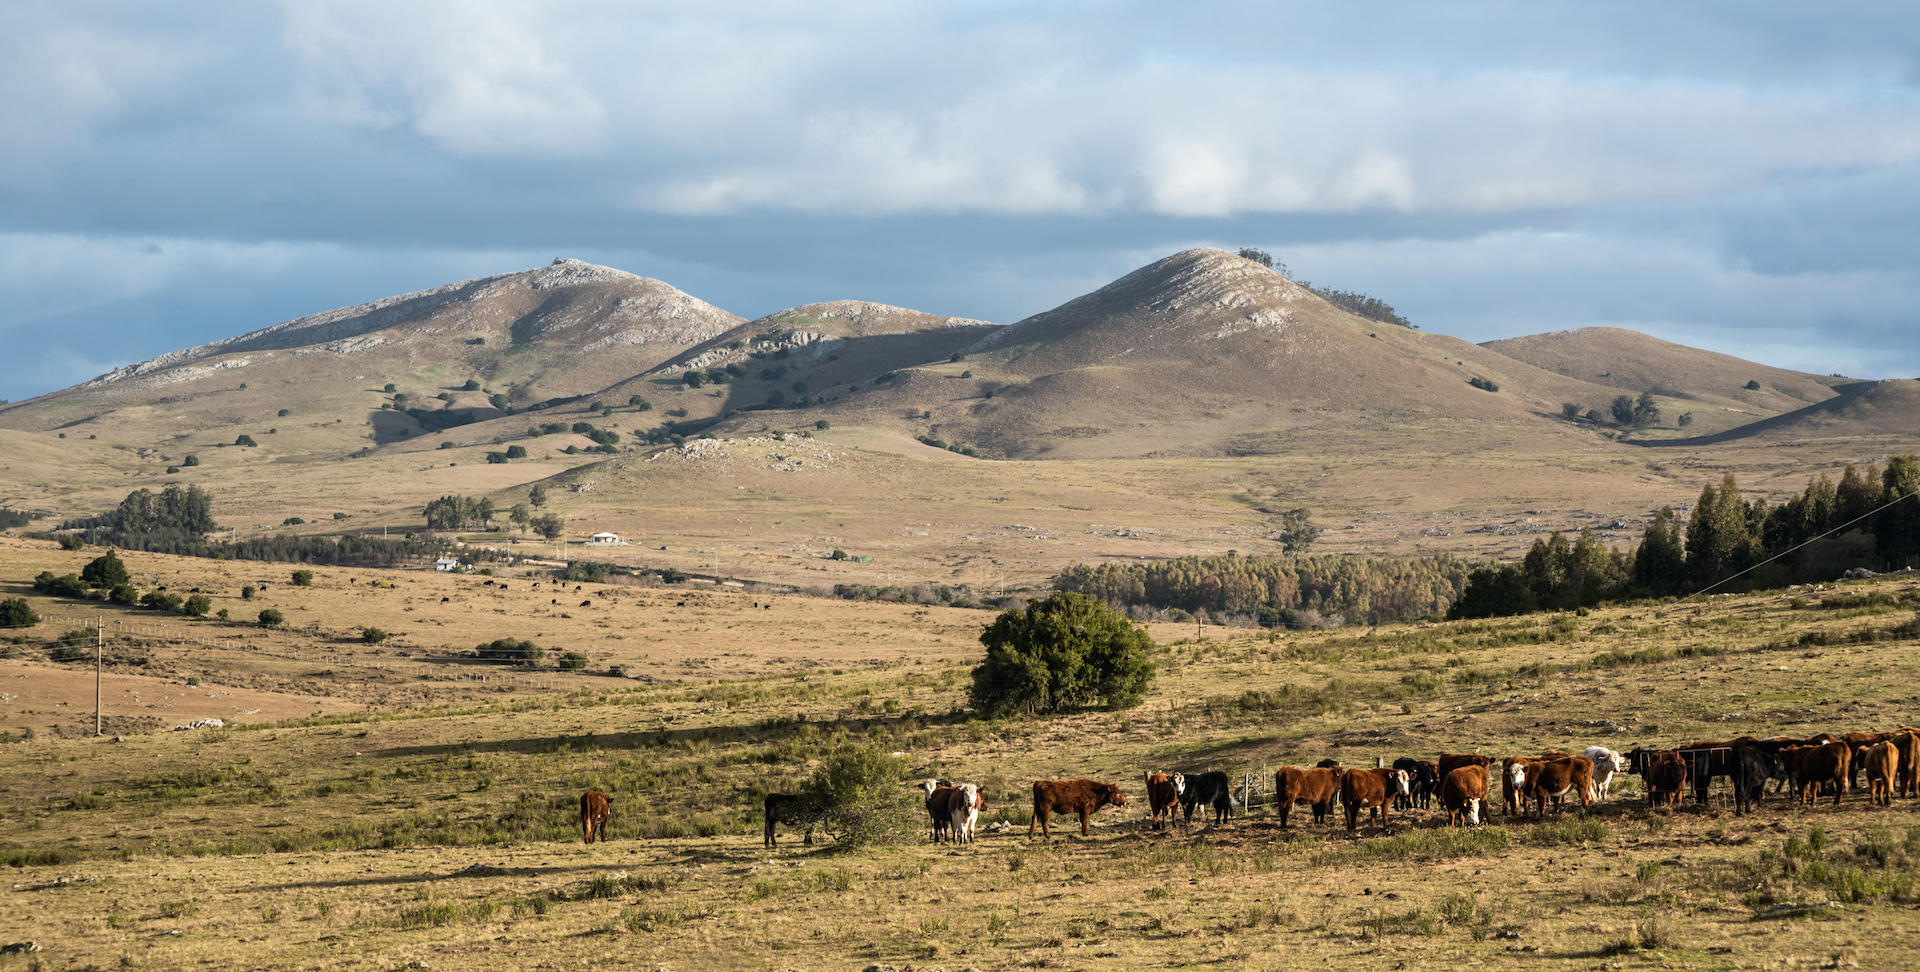 Cattle graze in the Uruguay's grassland